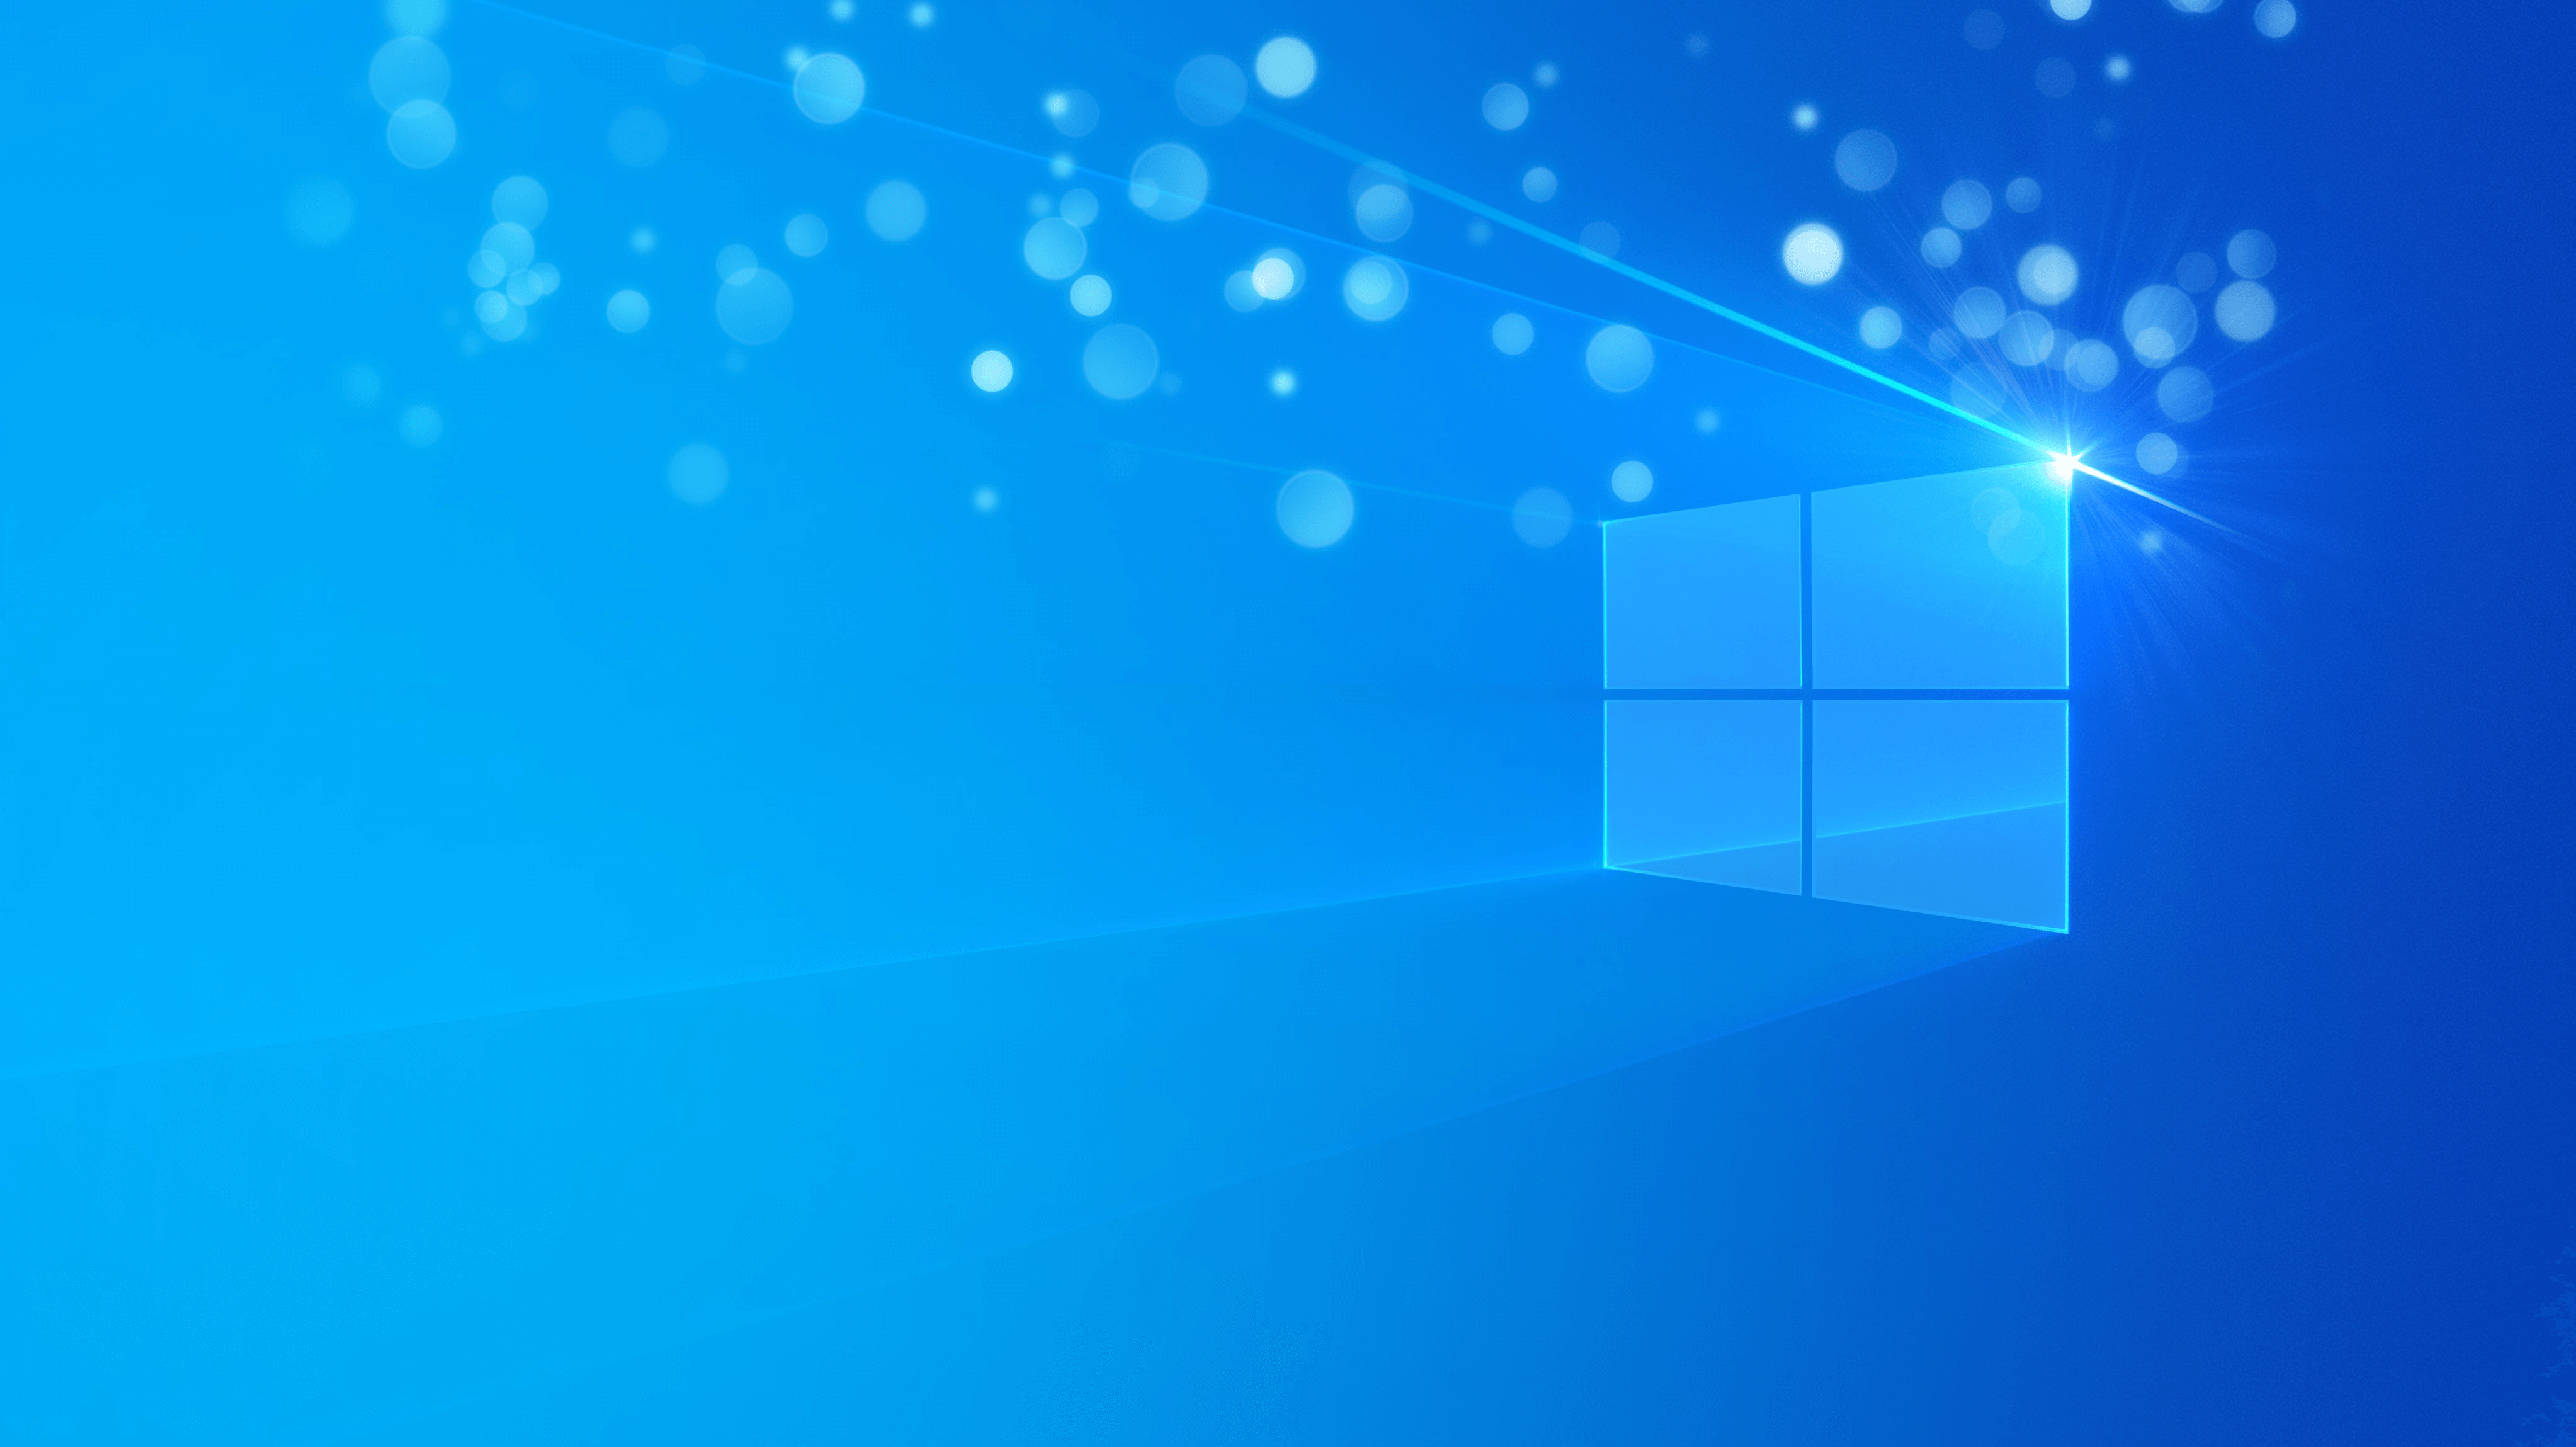 General 4092x2298 Windows 10 Microsoft operating system digital art simple background